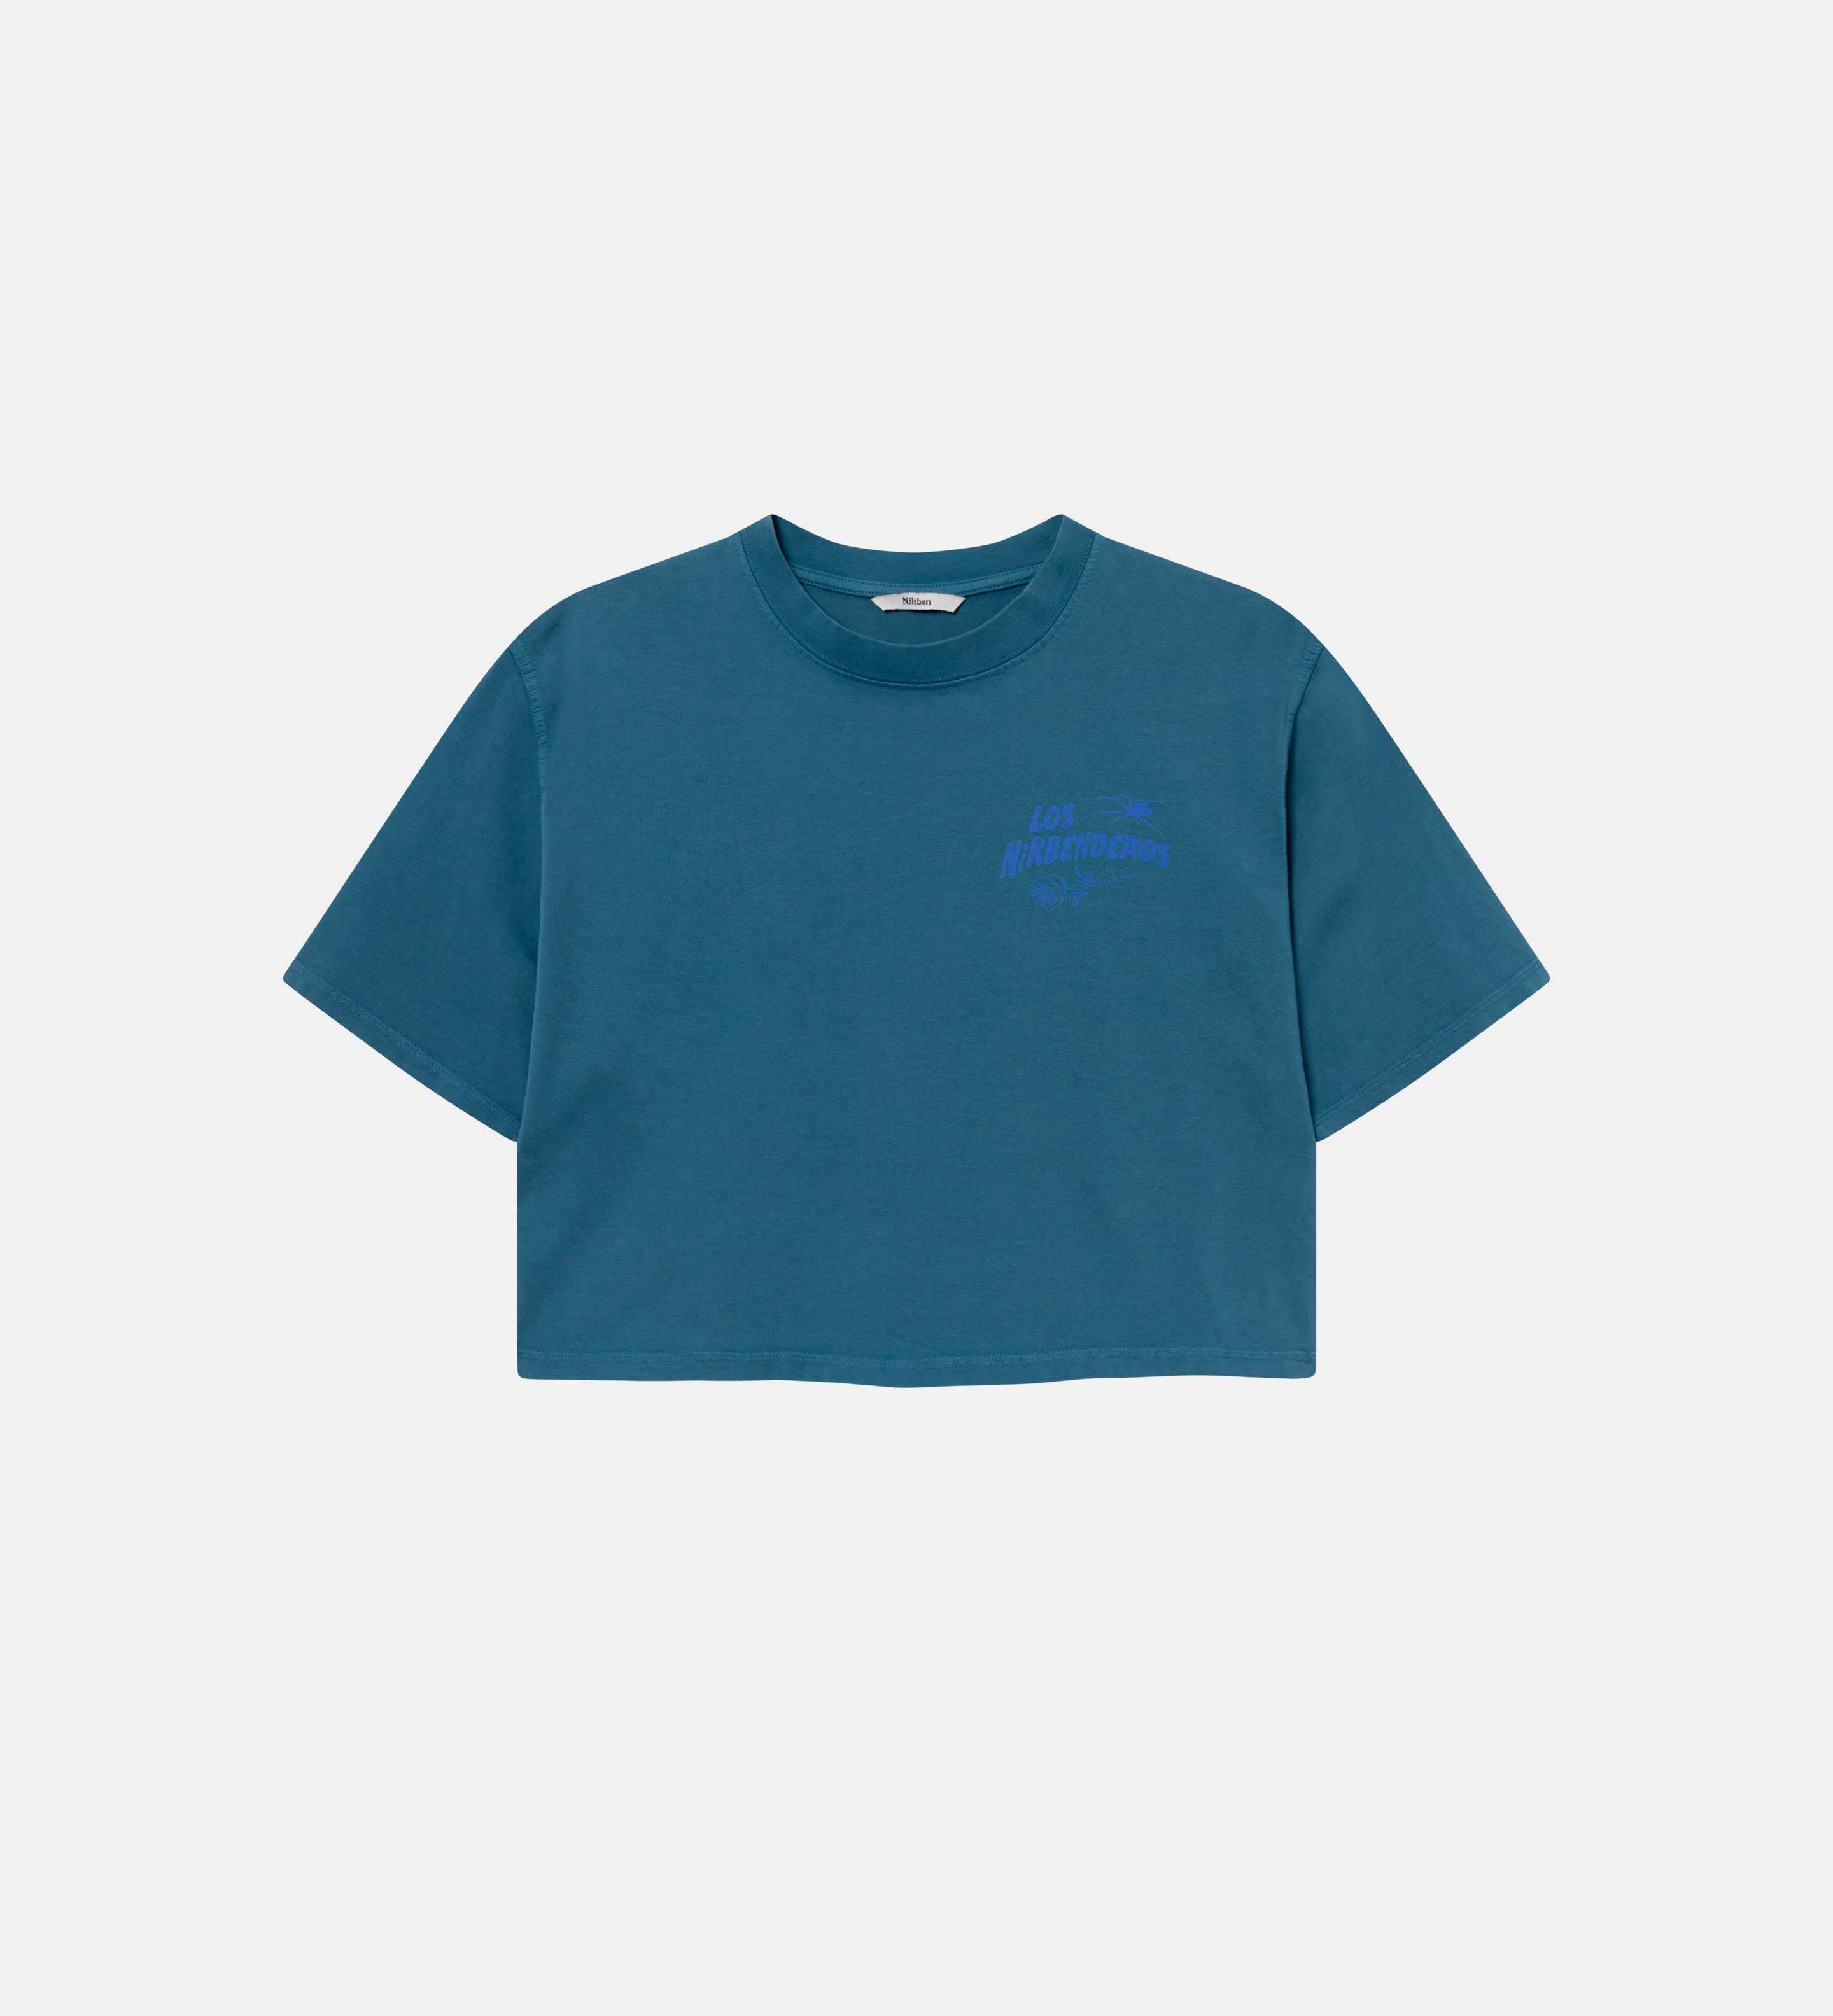 A navy blue cropped t-shirt blue "Los Nikbenderos" chest print